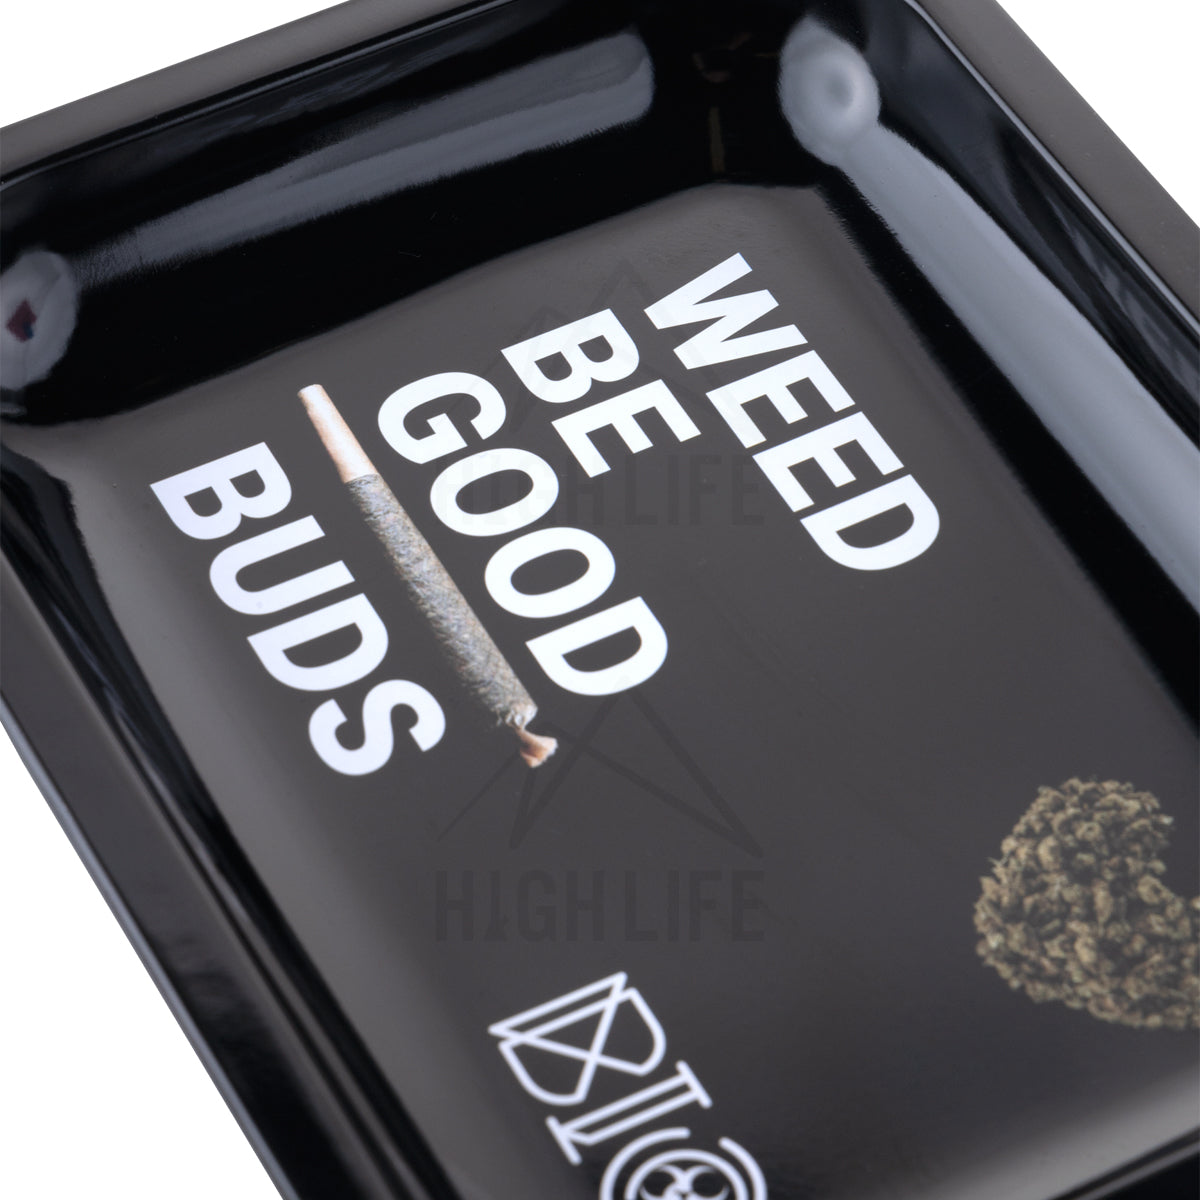 BIO Glass 'WEED BE GOOD' Rolling Tray - 7.5" x 5.5" - marijuana accessories